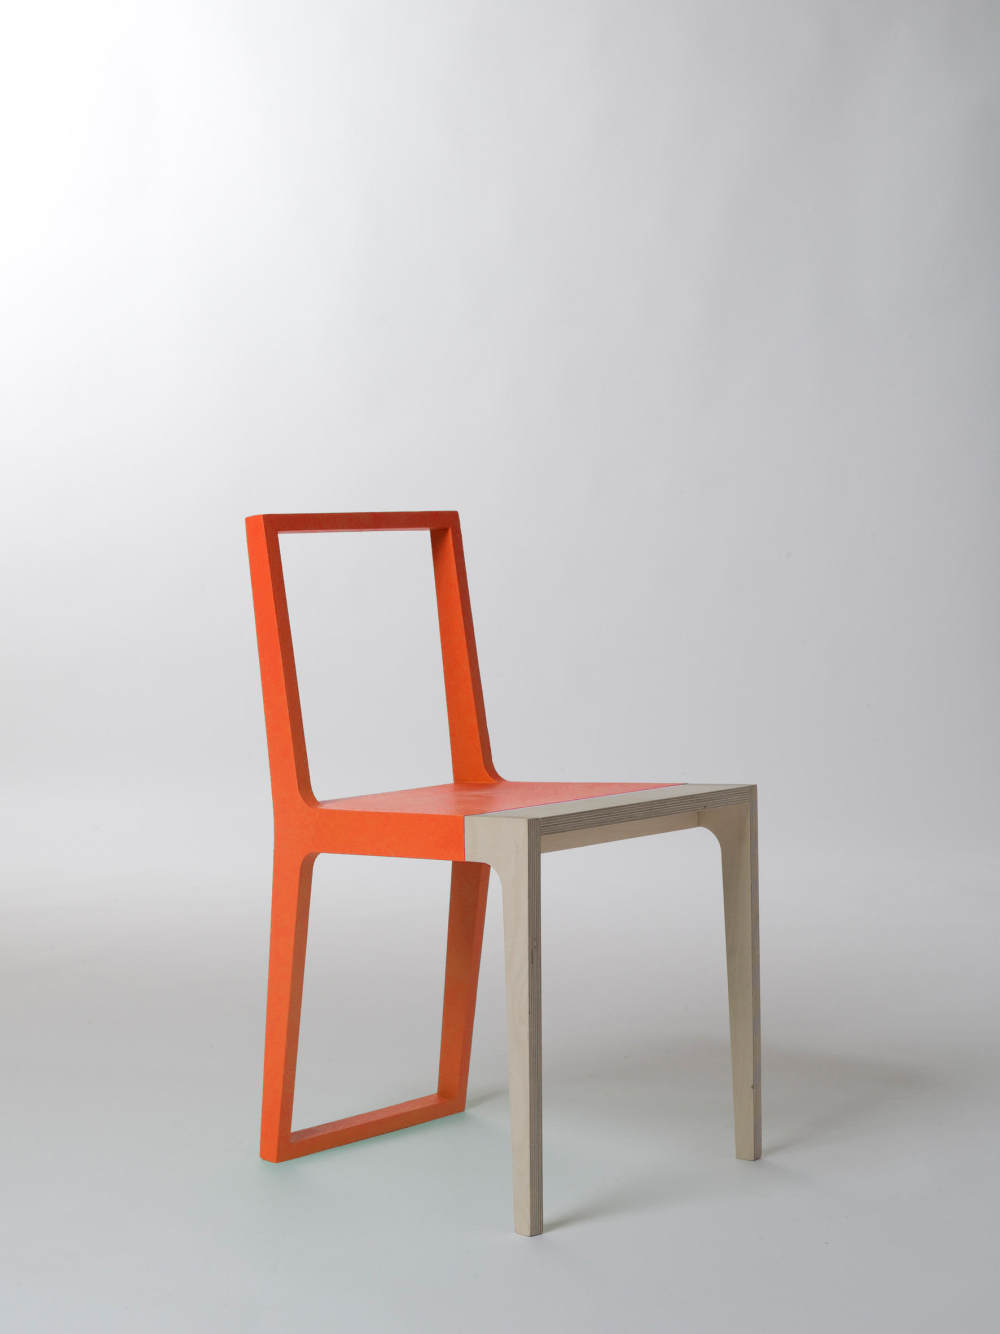 国外现代家具_skin-chair-orange-h.jpg